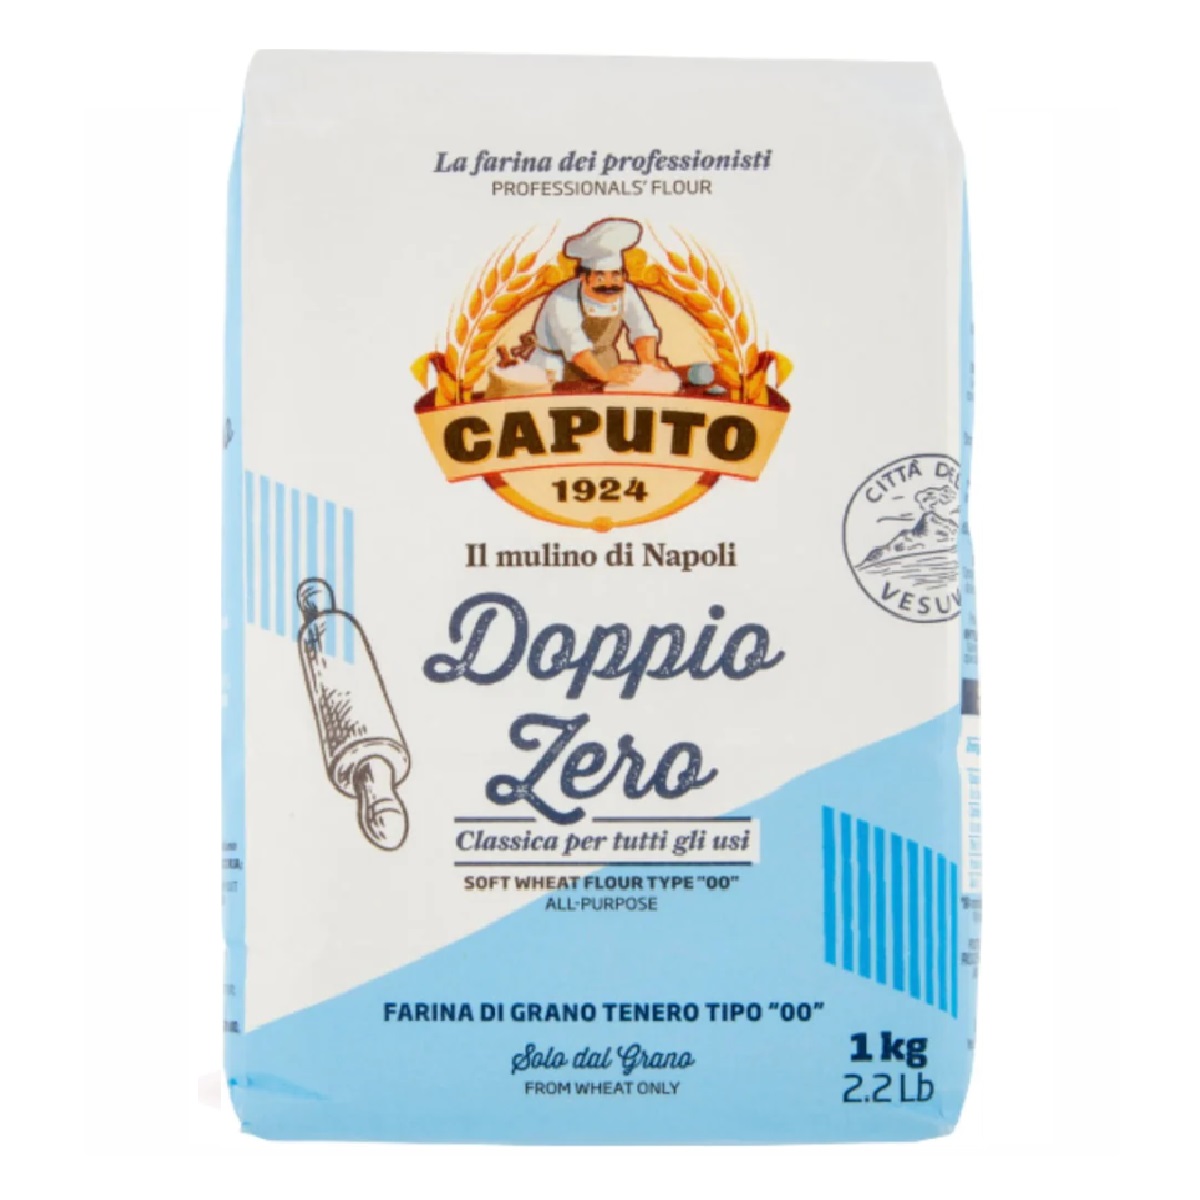 Caputo Farina "00" Doppio Zero Classic Flour 1kg